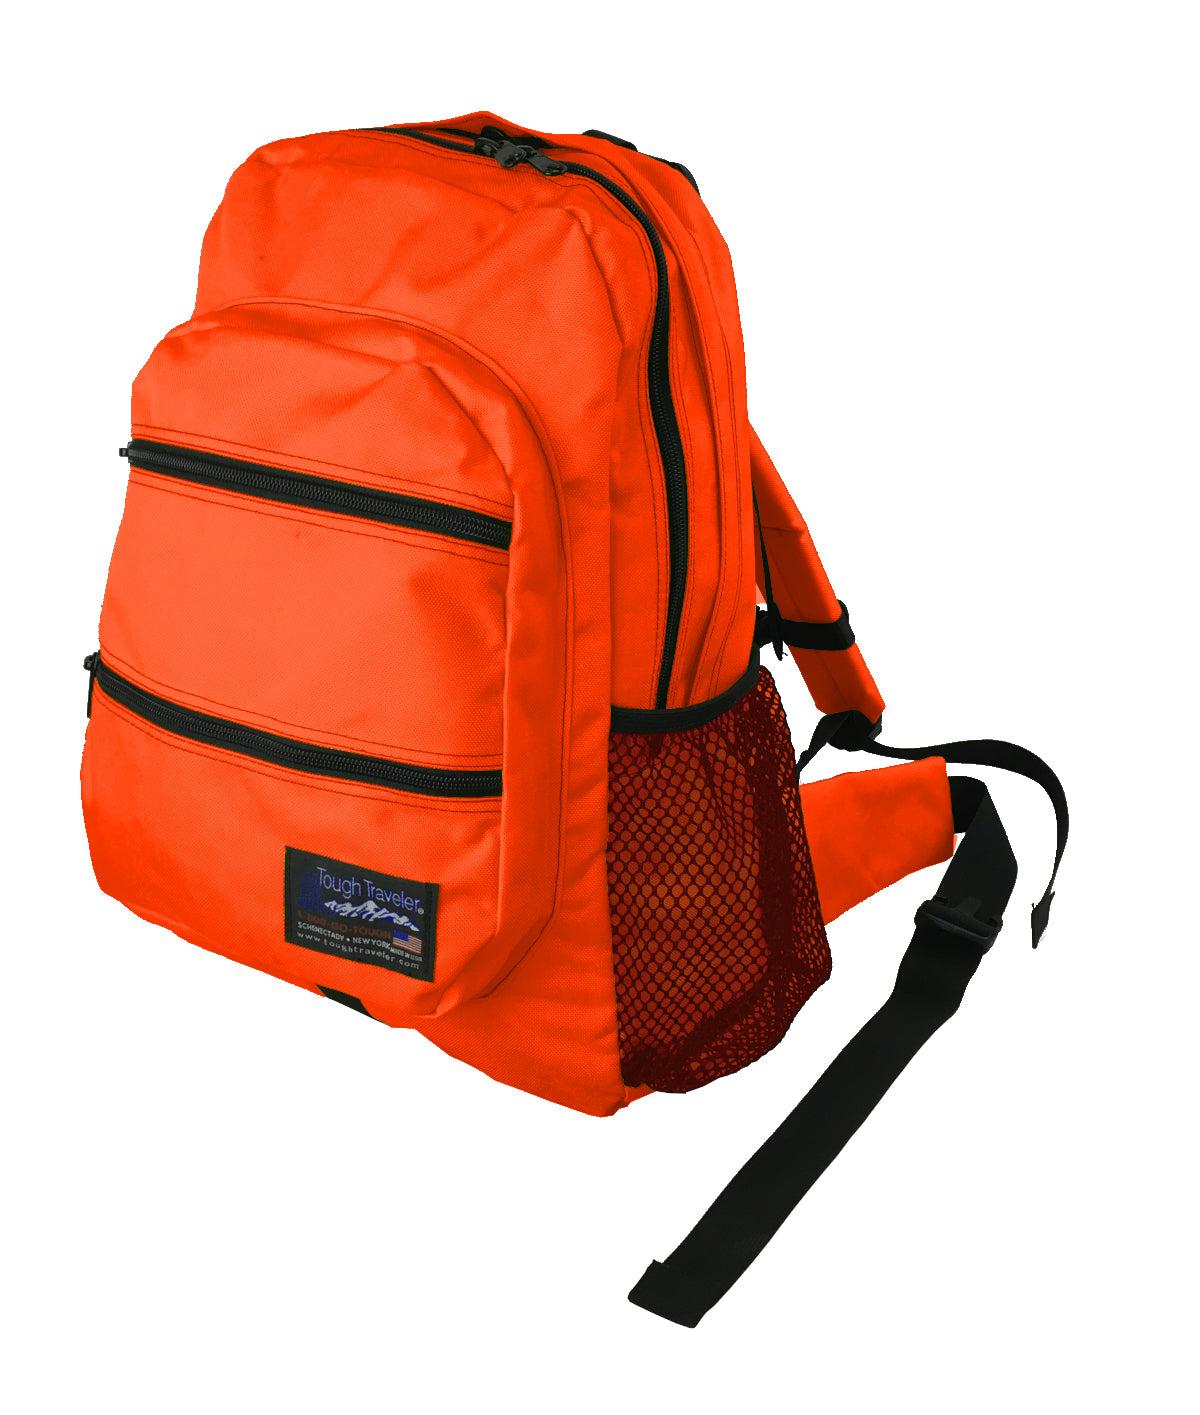 Everything Summer Camp Mesh Laundry Bags | Neon Orange